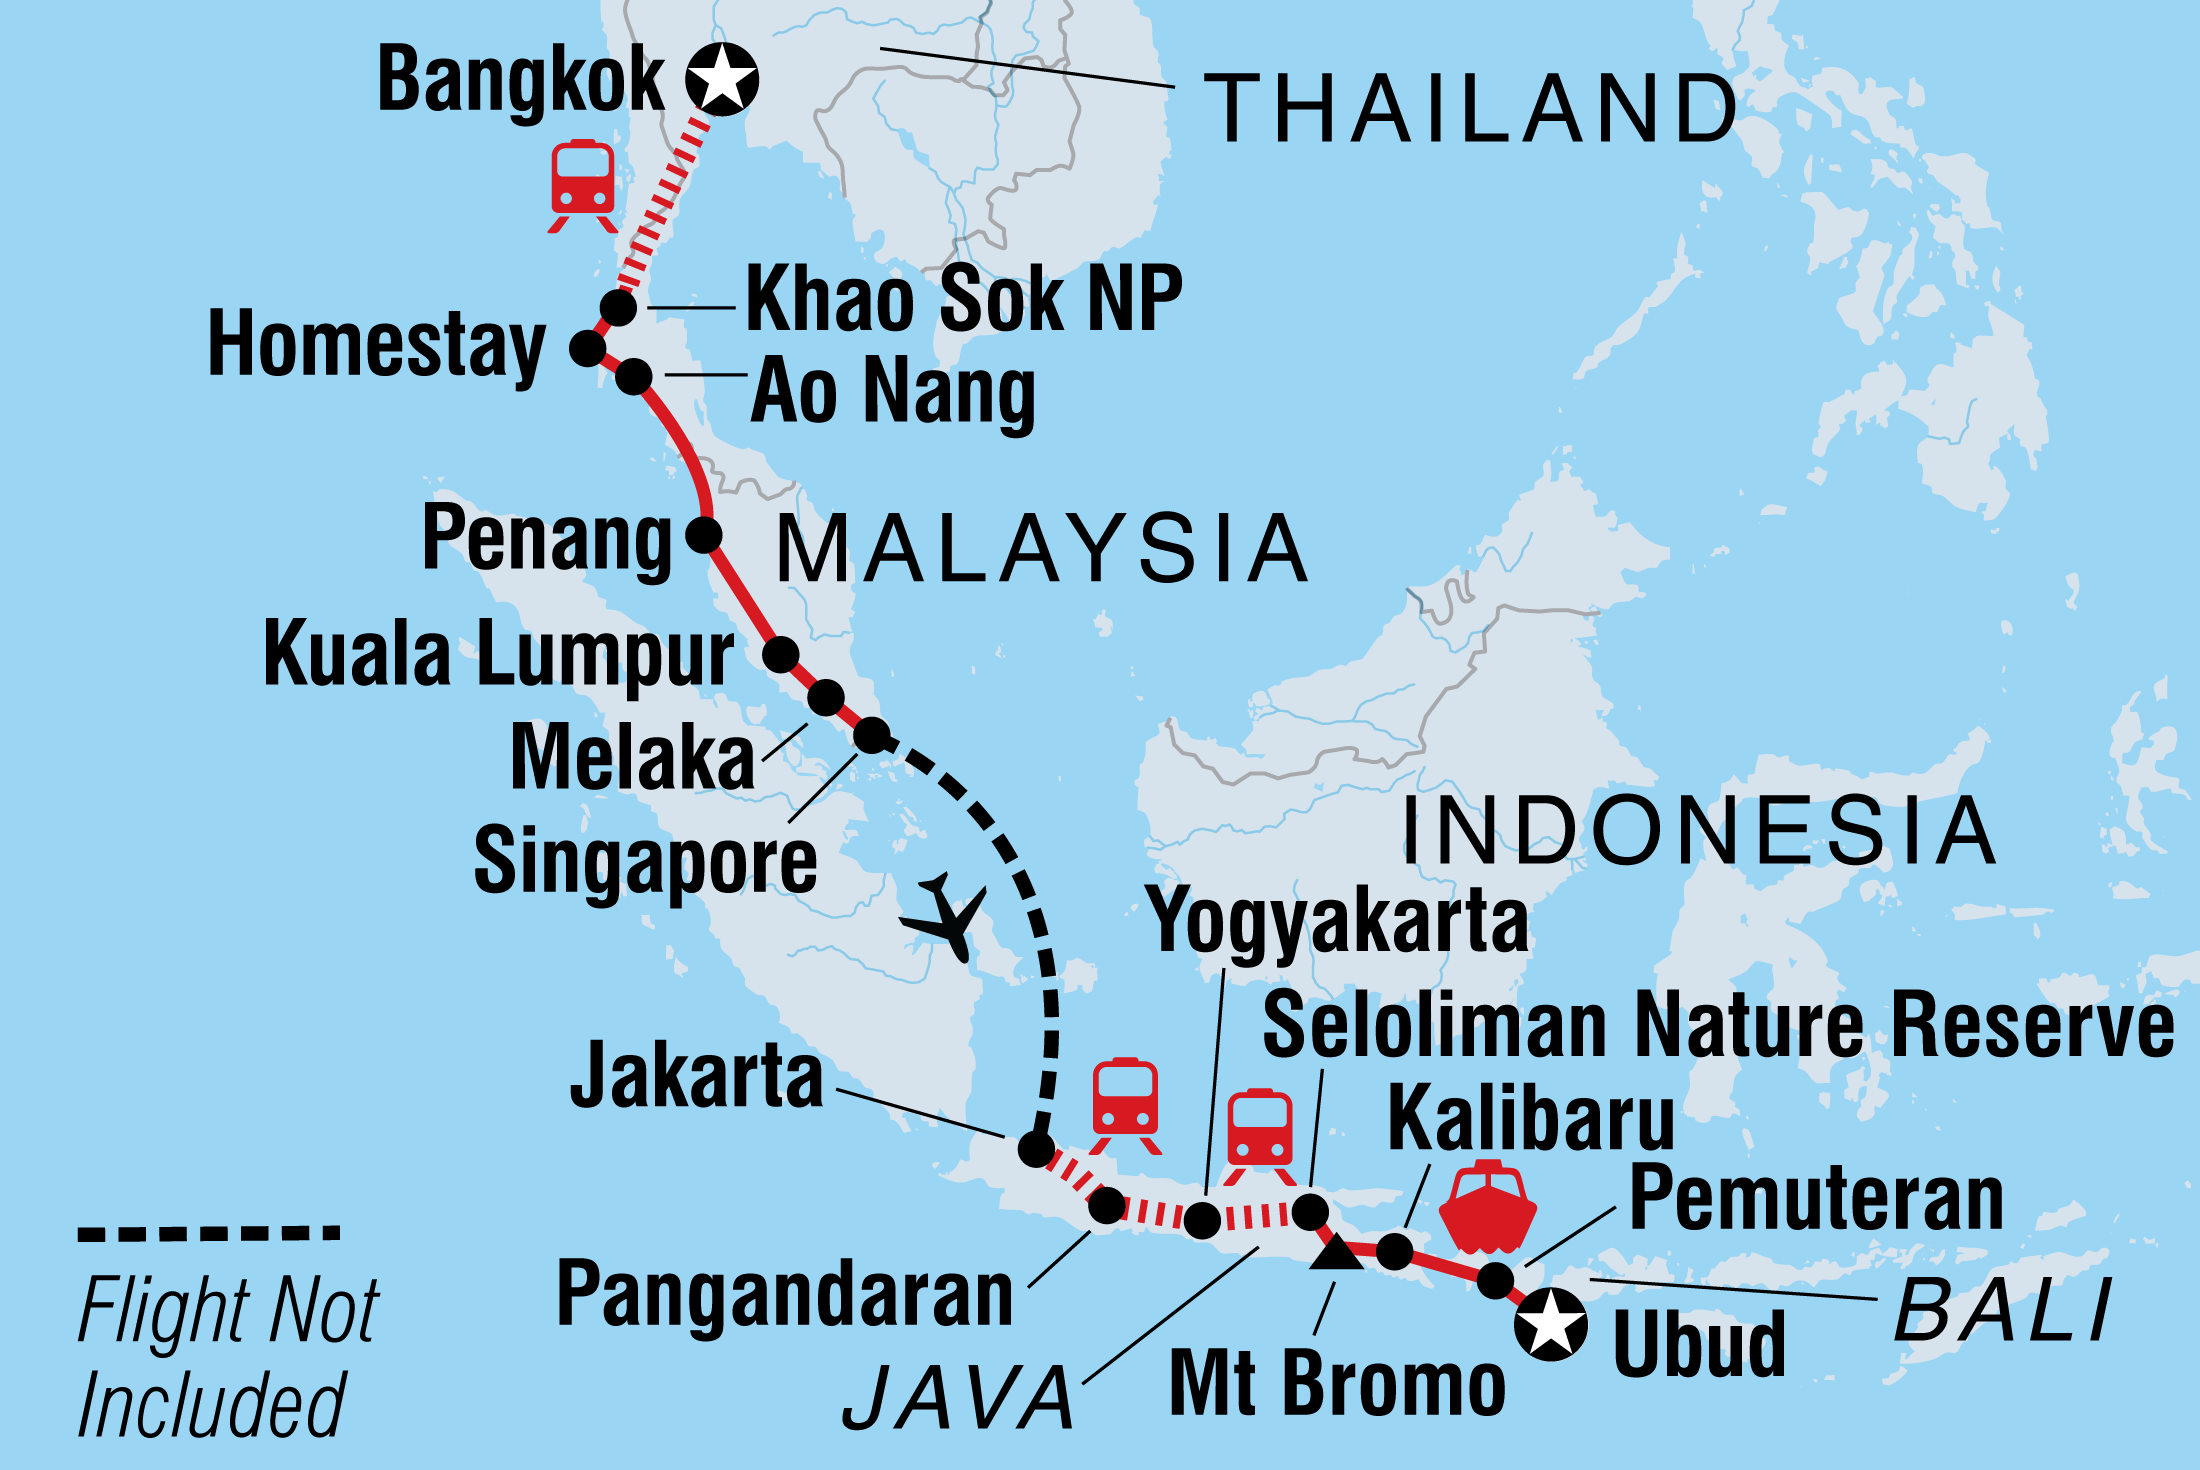 Indonesia Tours & Travel | Intrepid Travel US